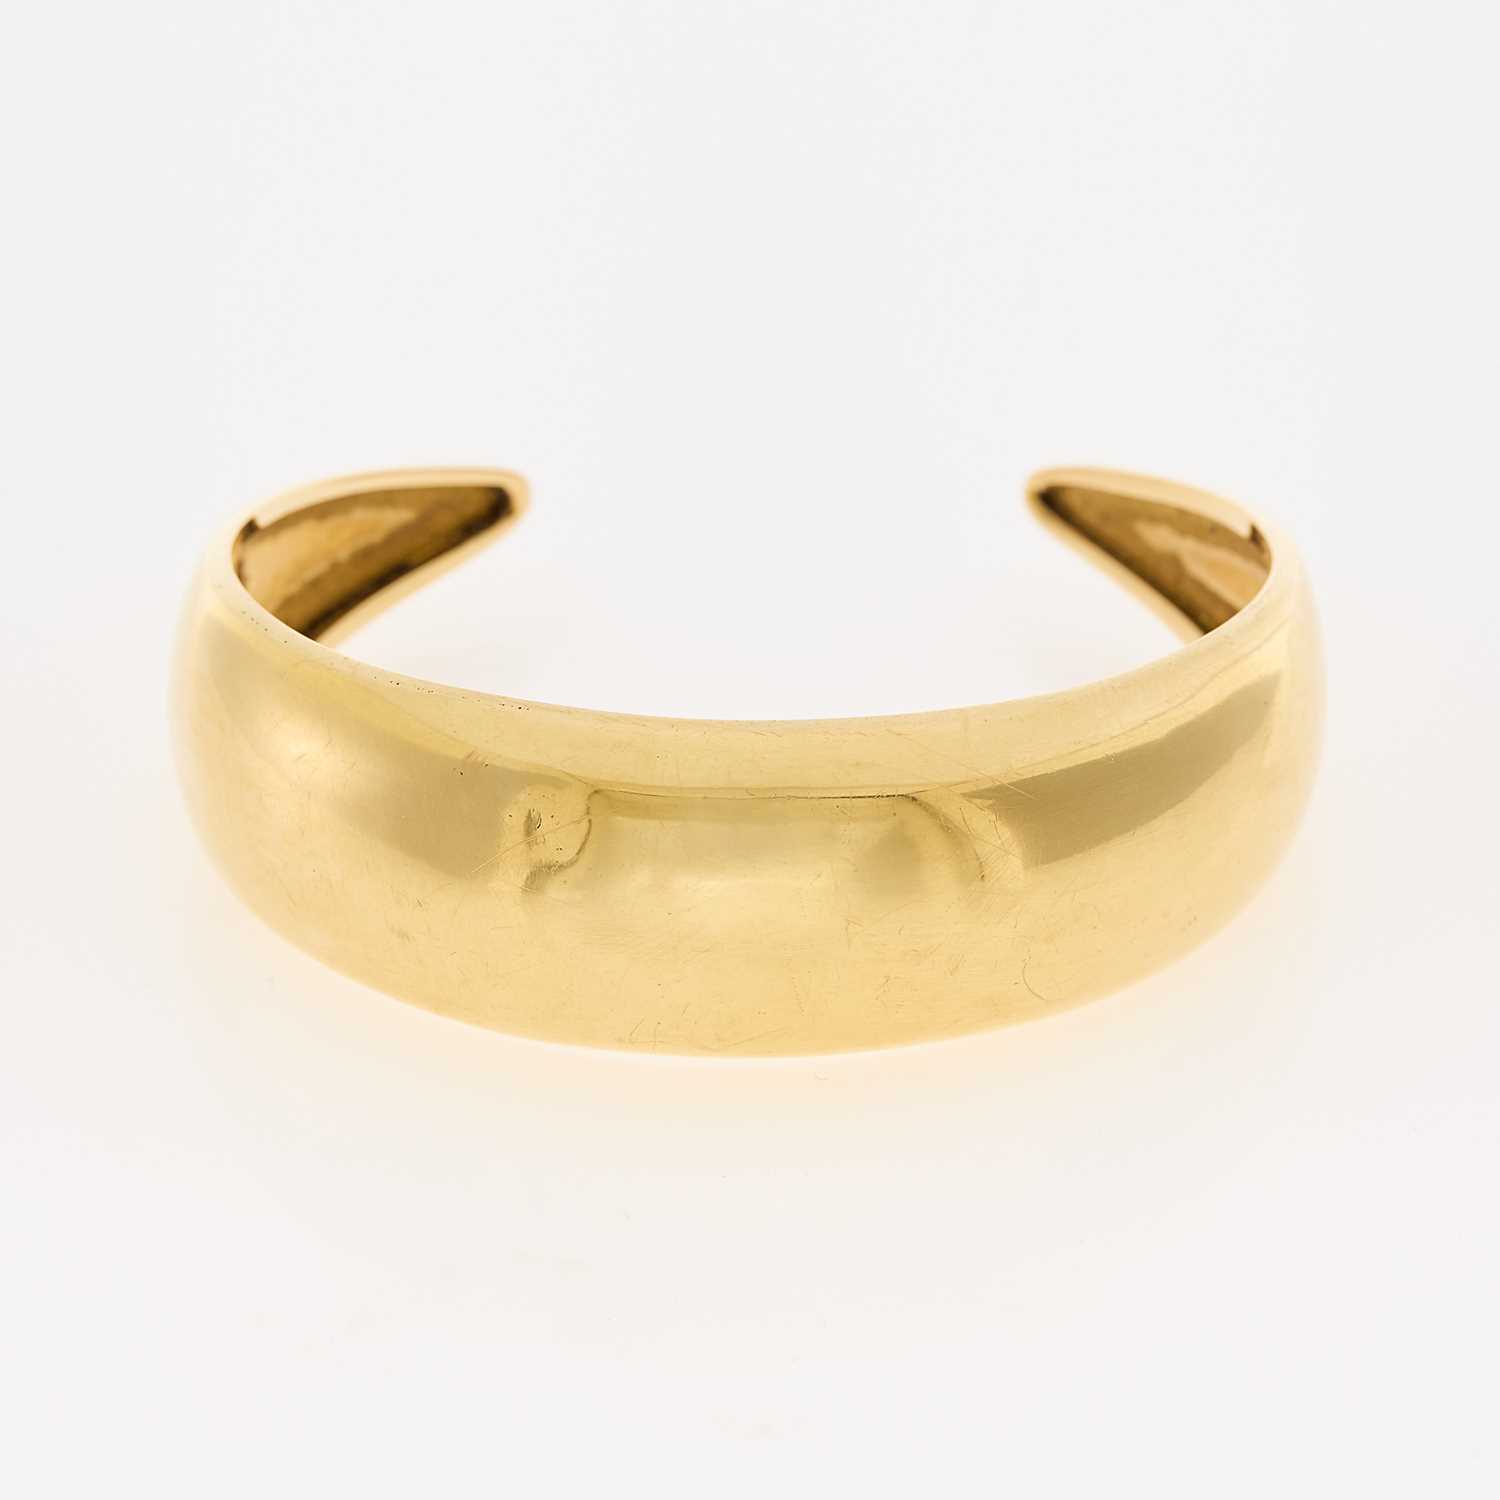 Lot 1025 - Gold Cuff Bangle Bracelet